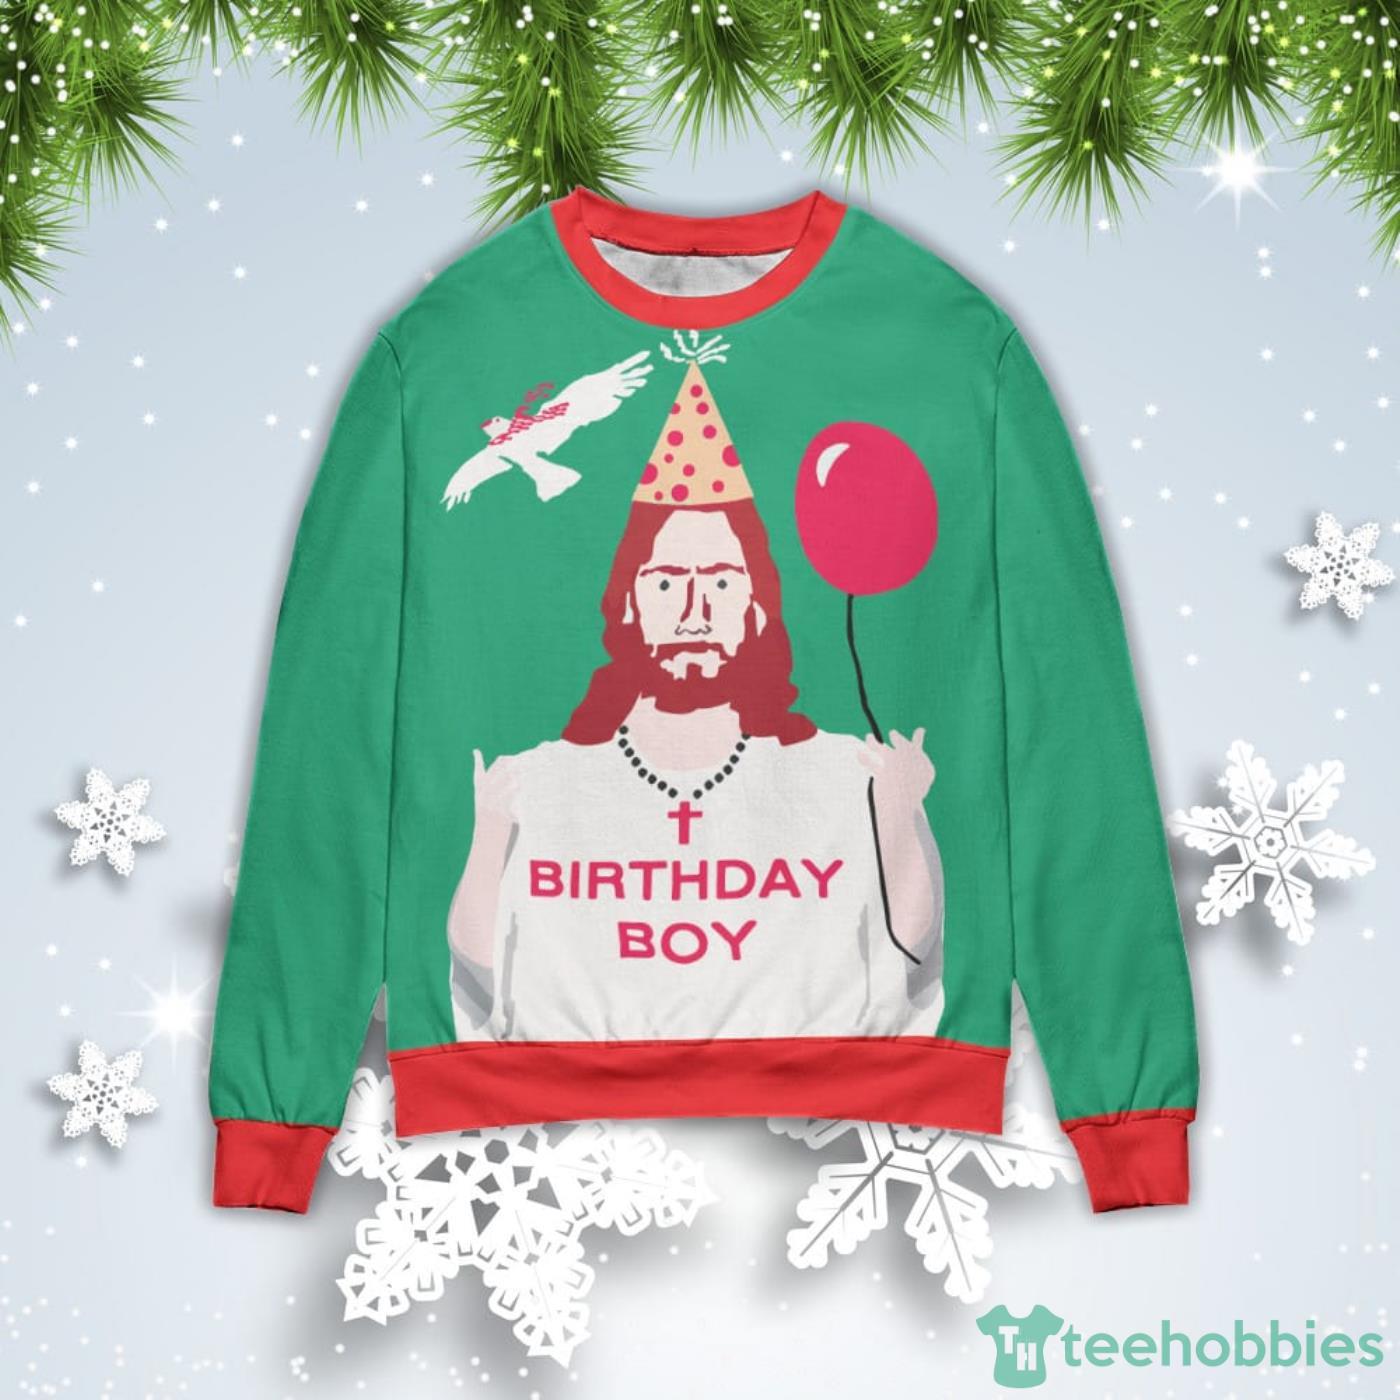 Birthday Boy Christmas Gift Ugly Christmas Sweater Product Photo 1